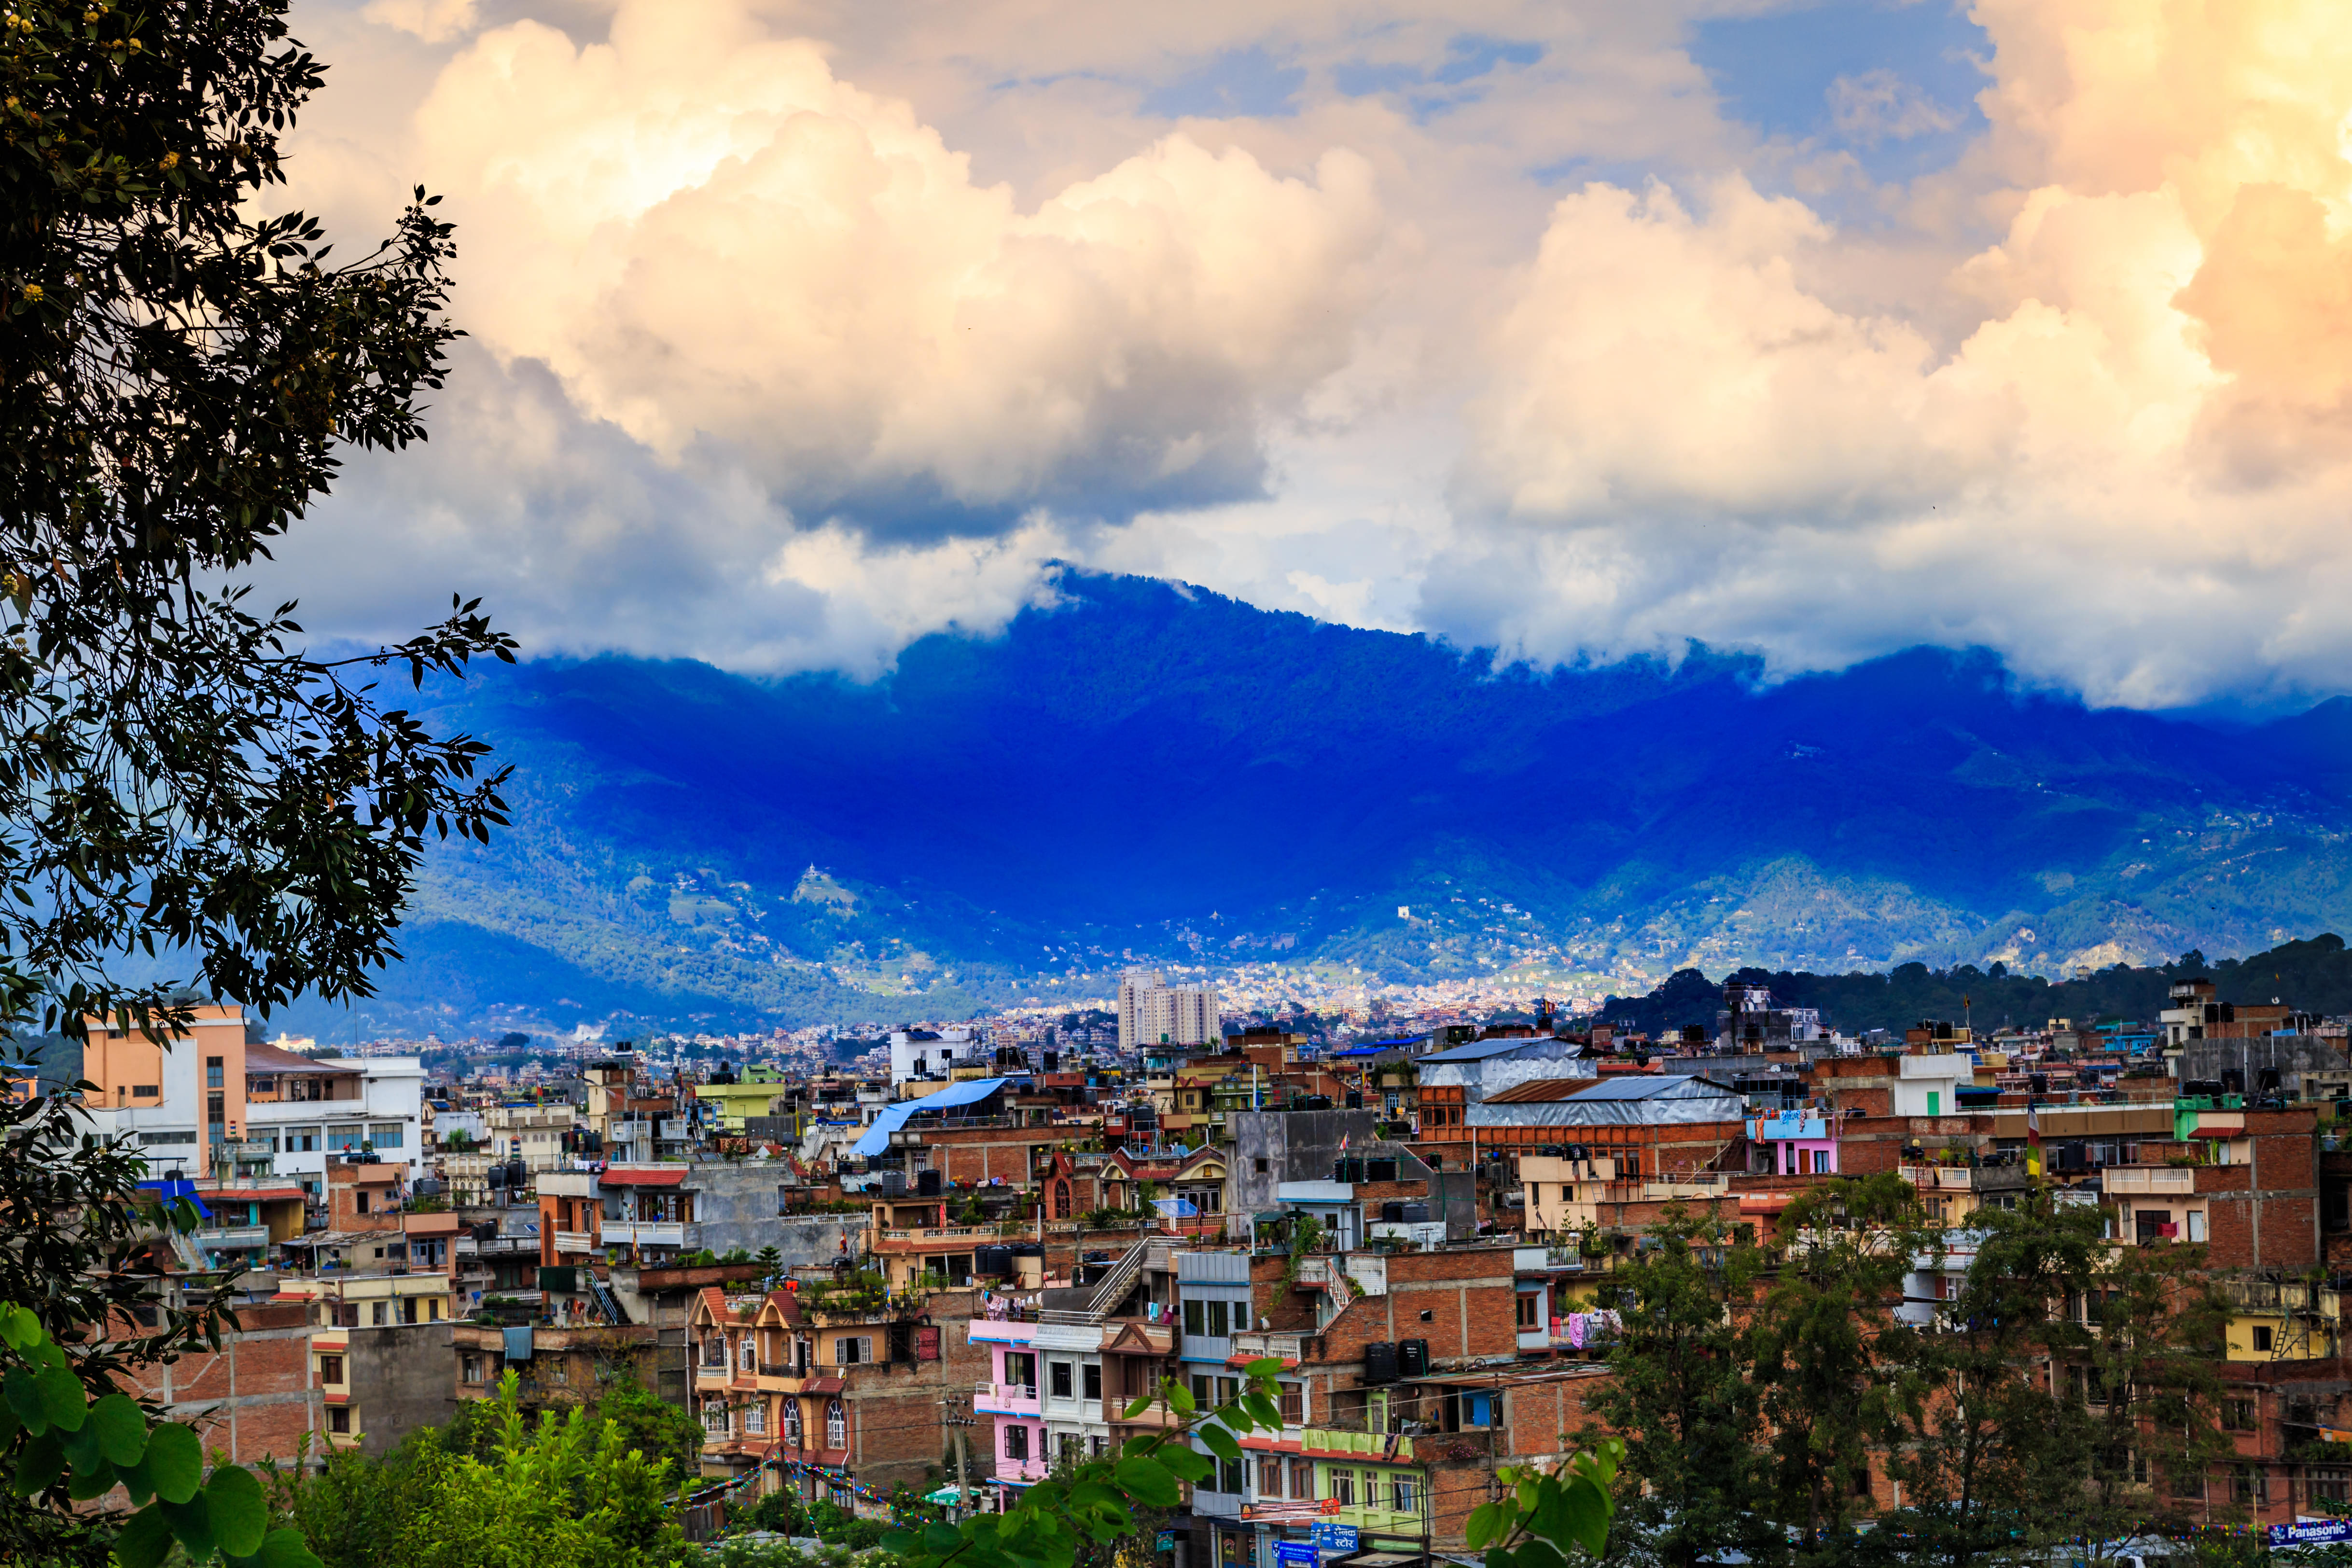 Things to Do in Kathmandu